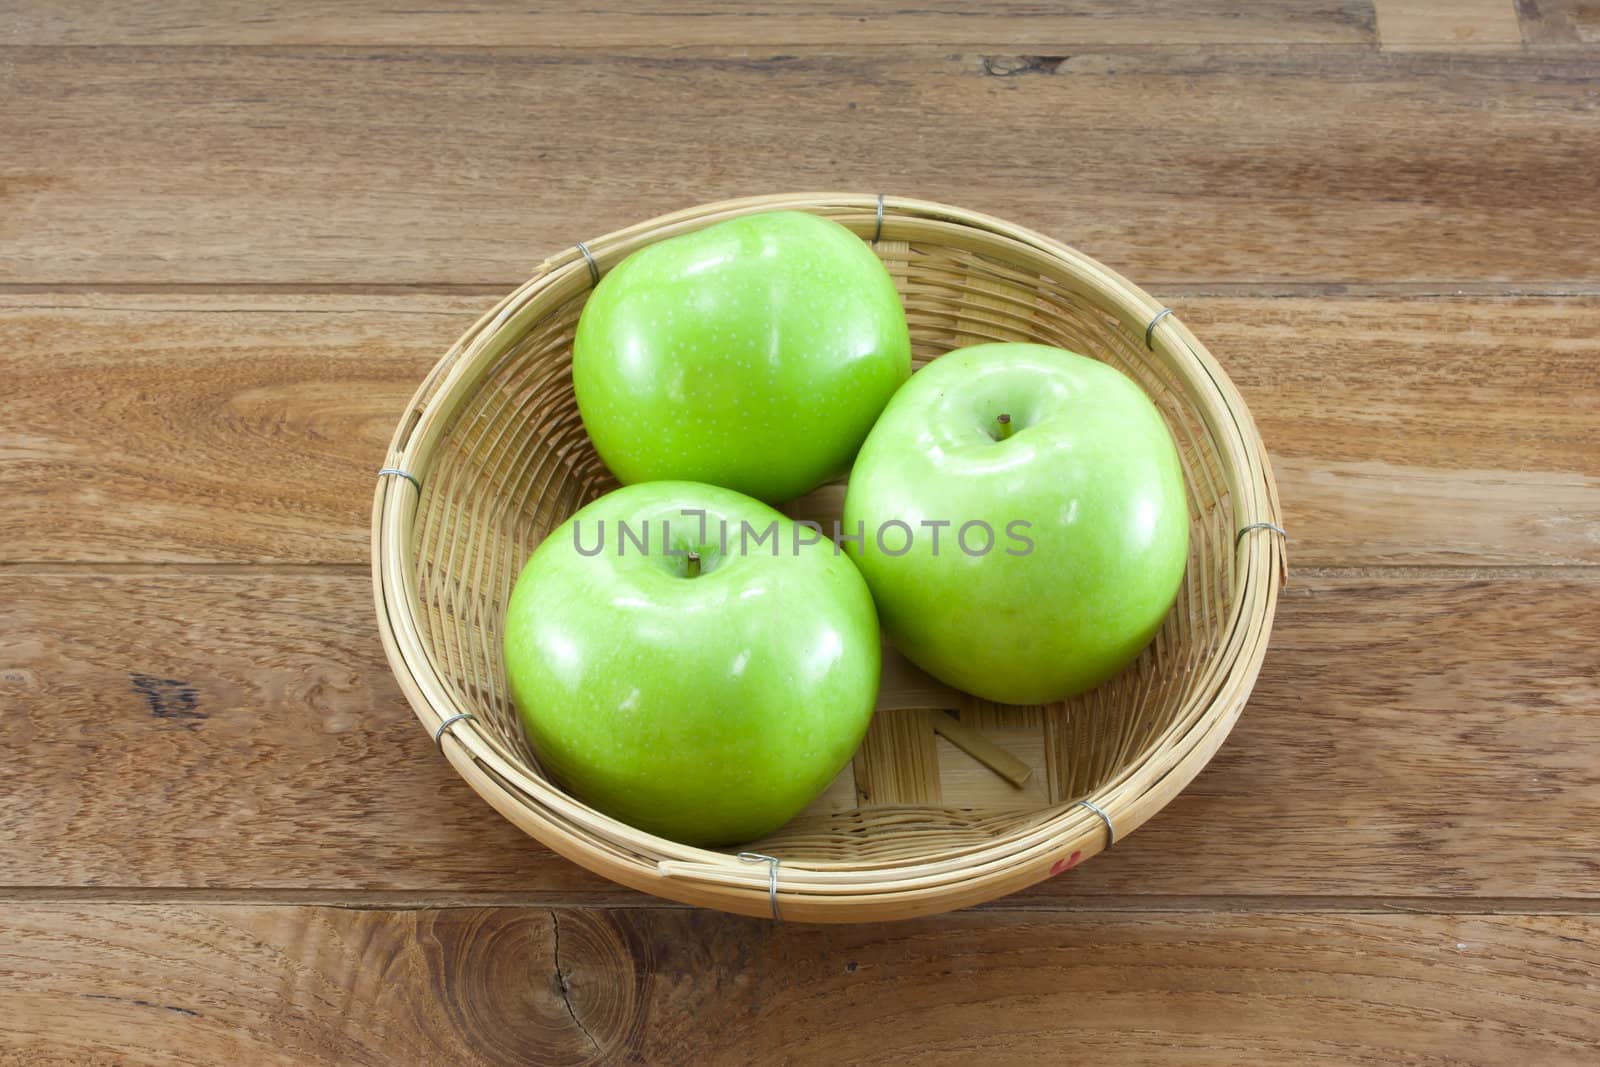 3 green apples on basket with teak wood background.